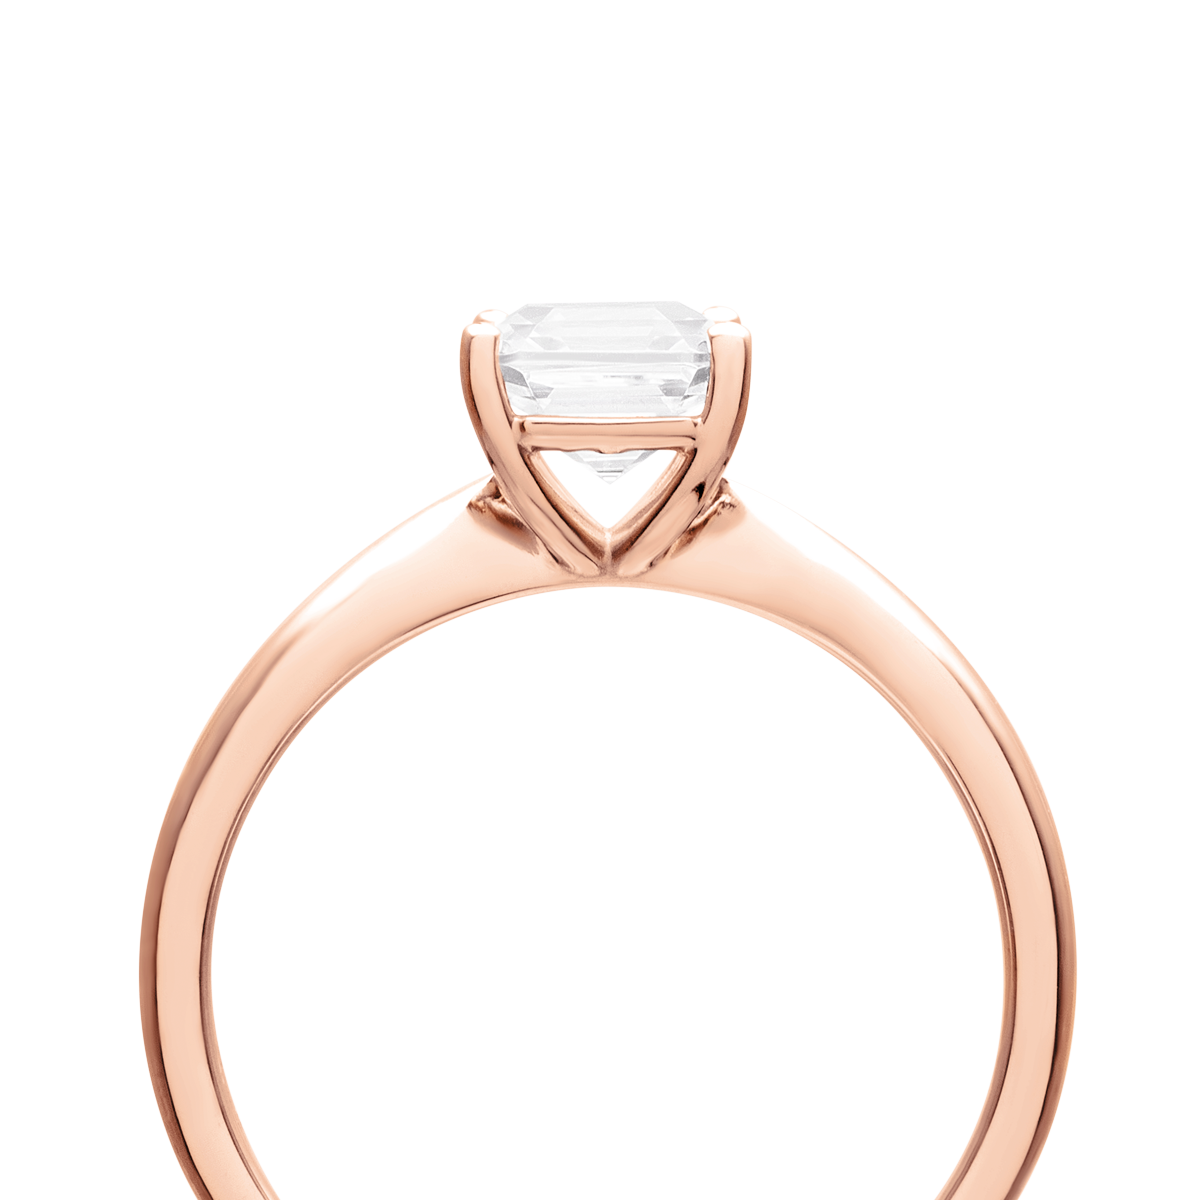 Princess Solitaire Engagement + White Diamonds